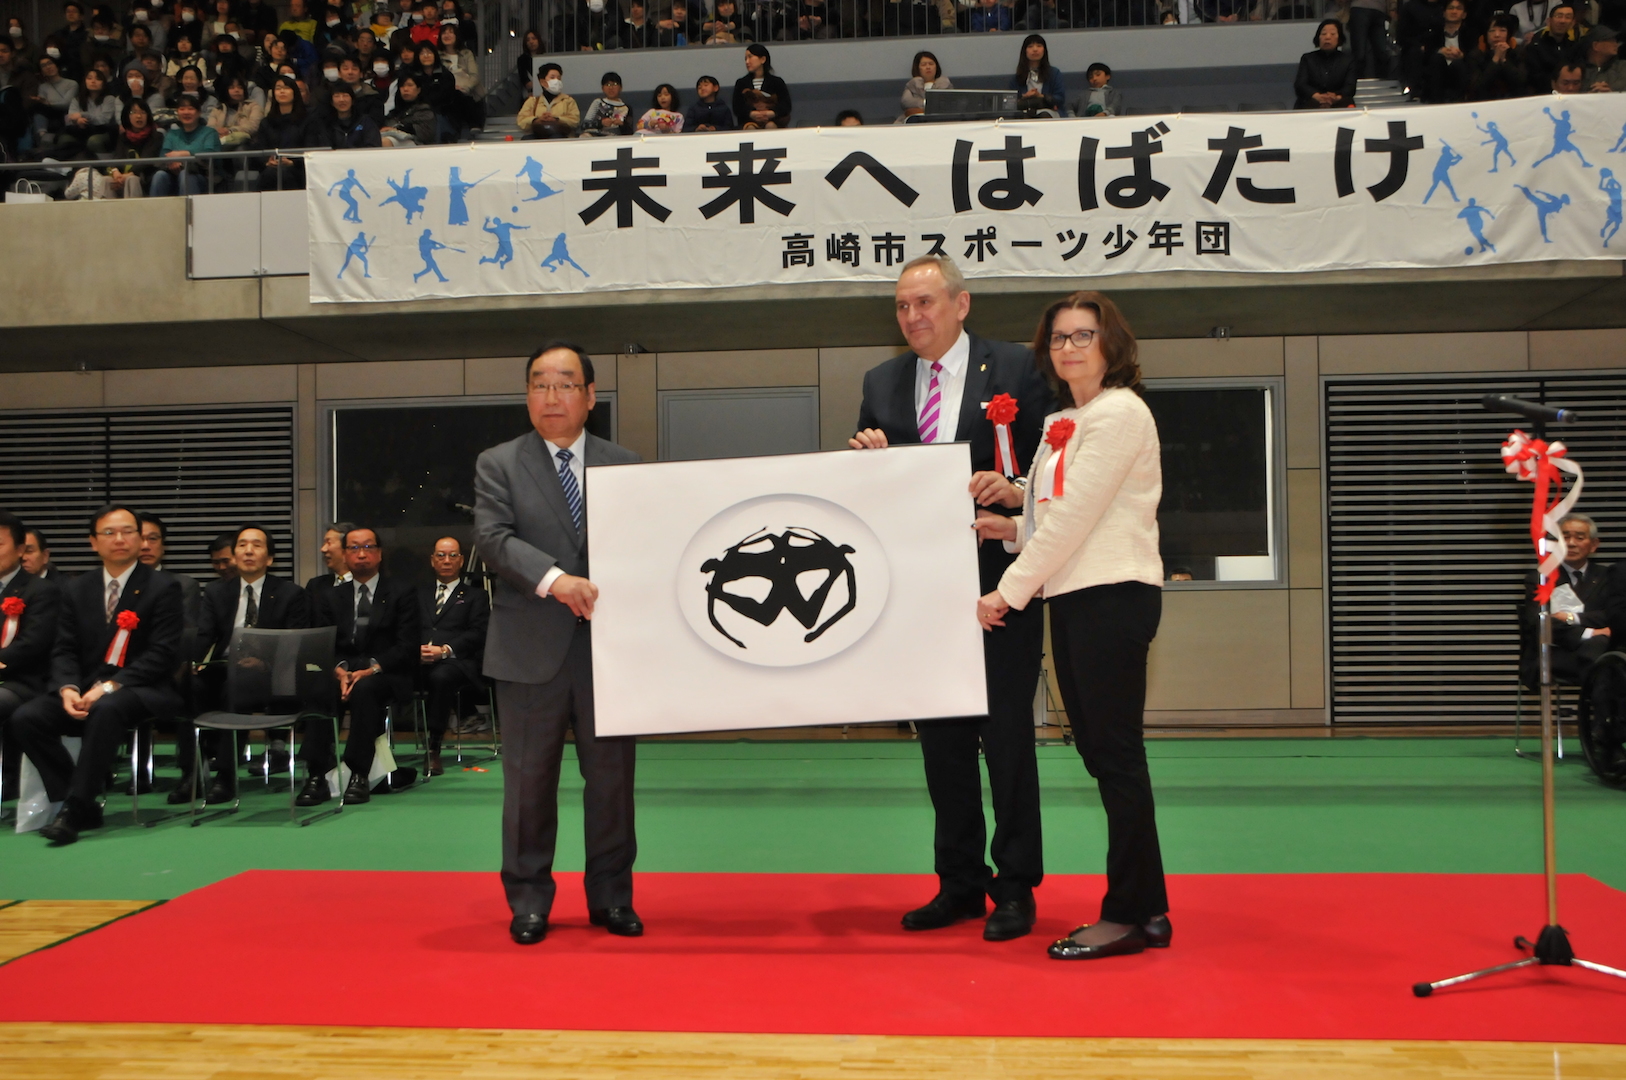 Takasaki Arena Opening Ceremony<br />Takasaki Junior Sports Club Opening Ceremony 1